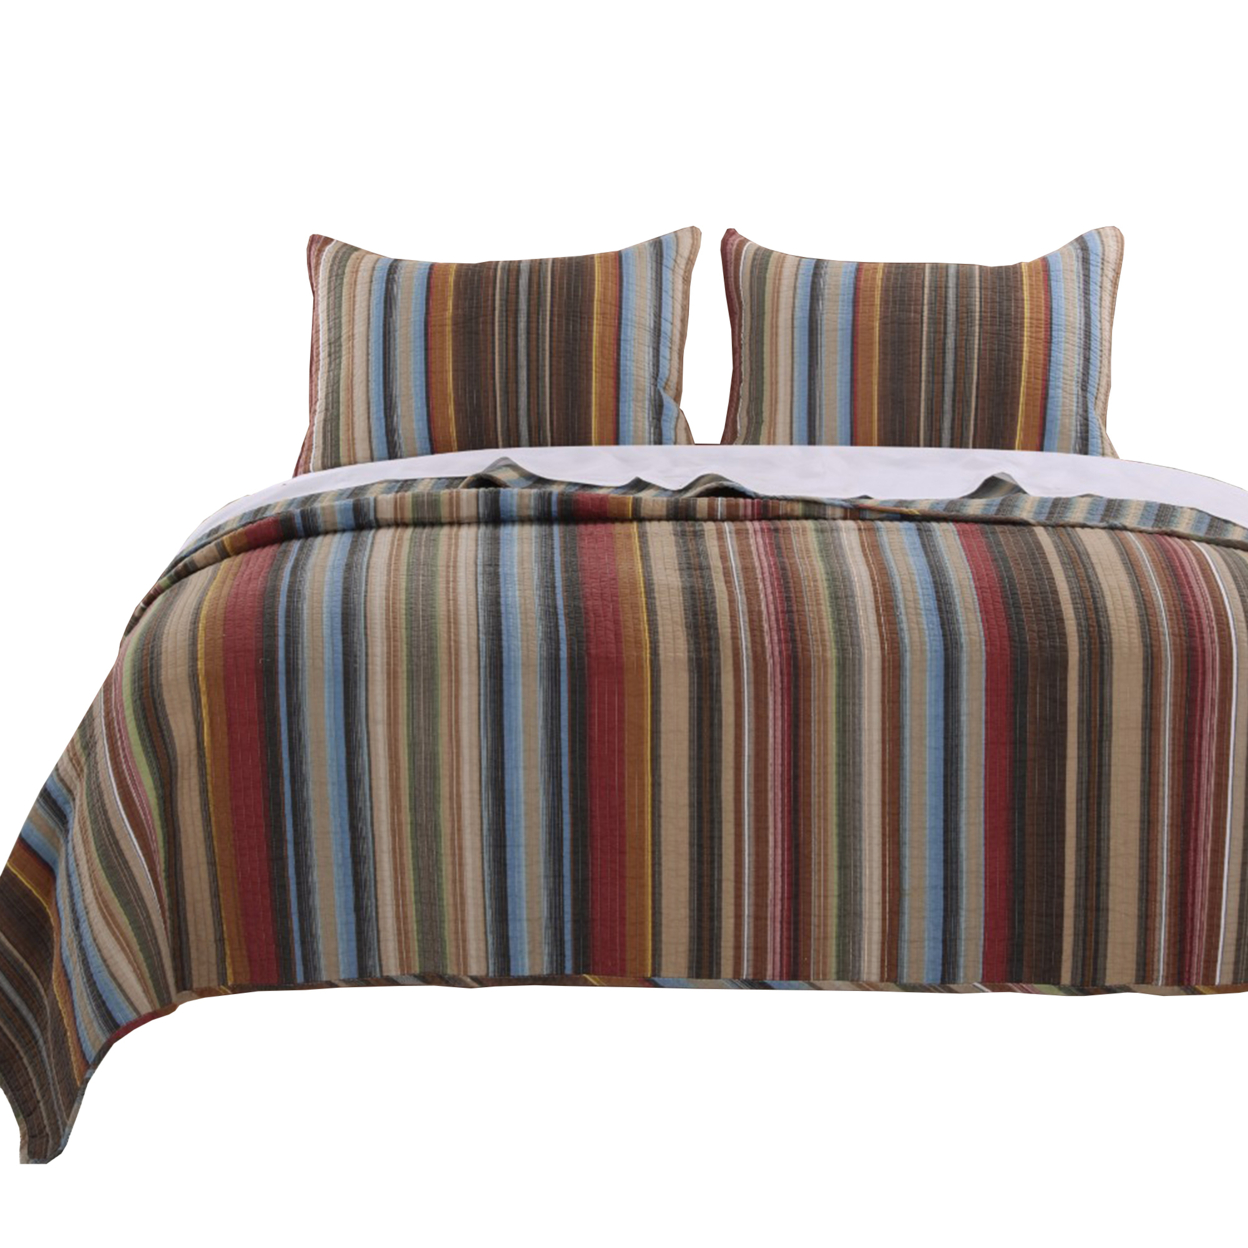 Phoenix Fabric 3 Piece King Size Quilt Set With Striped Prints, Multicolor- Saltoro Sherpi